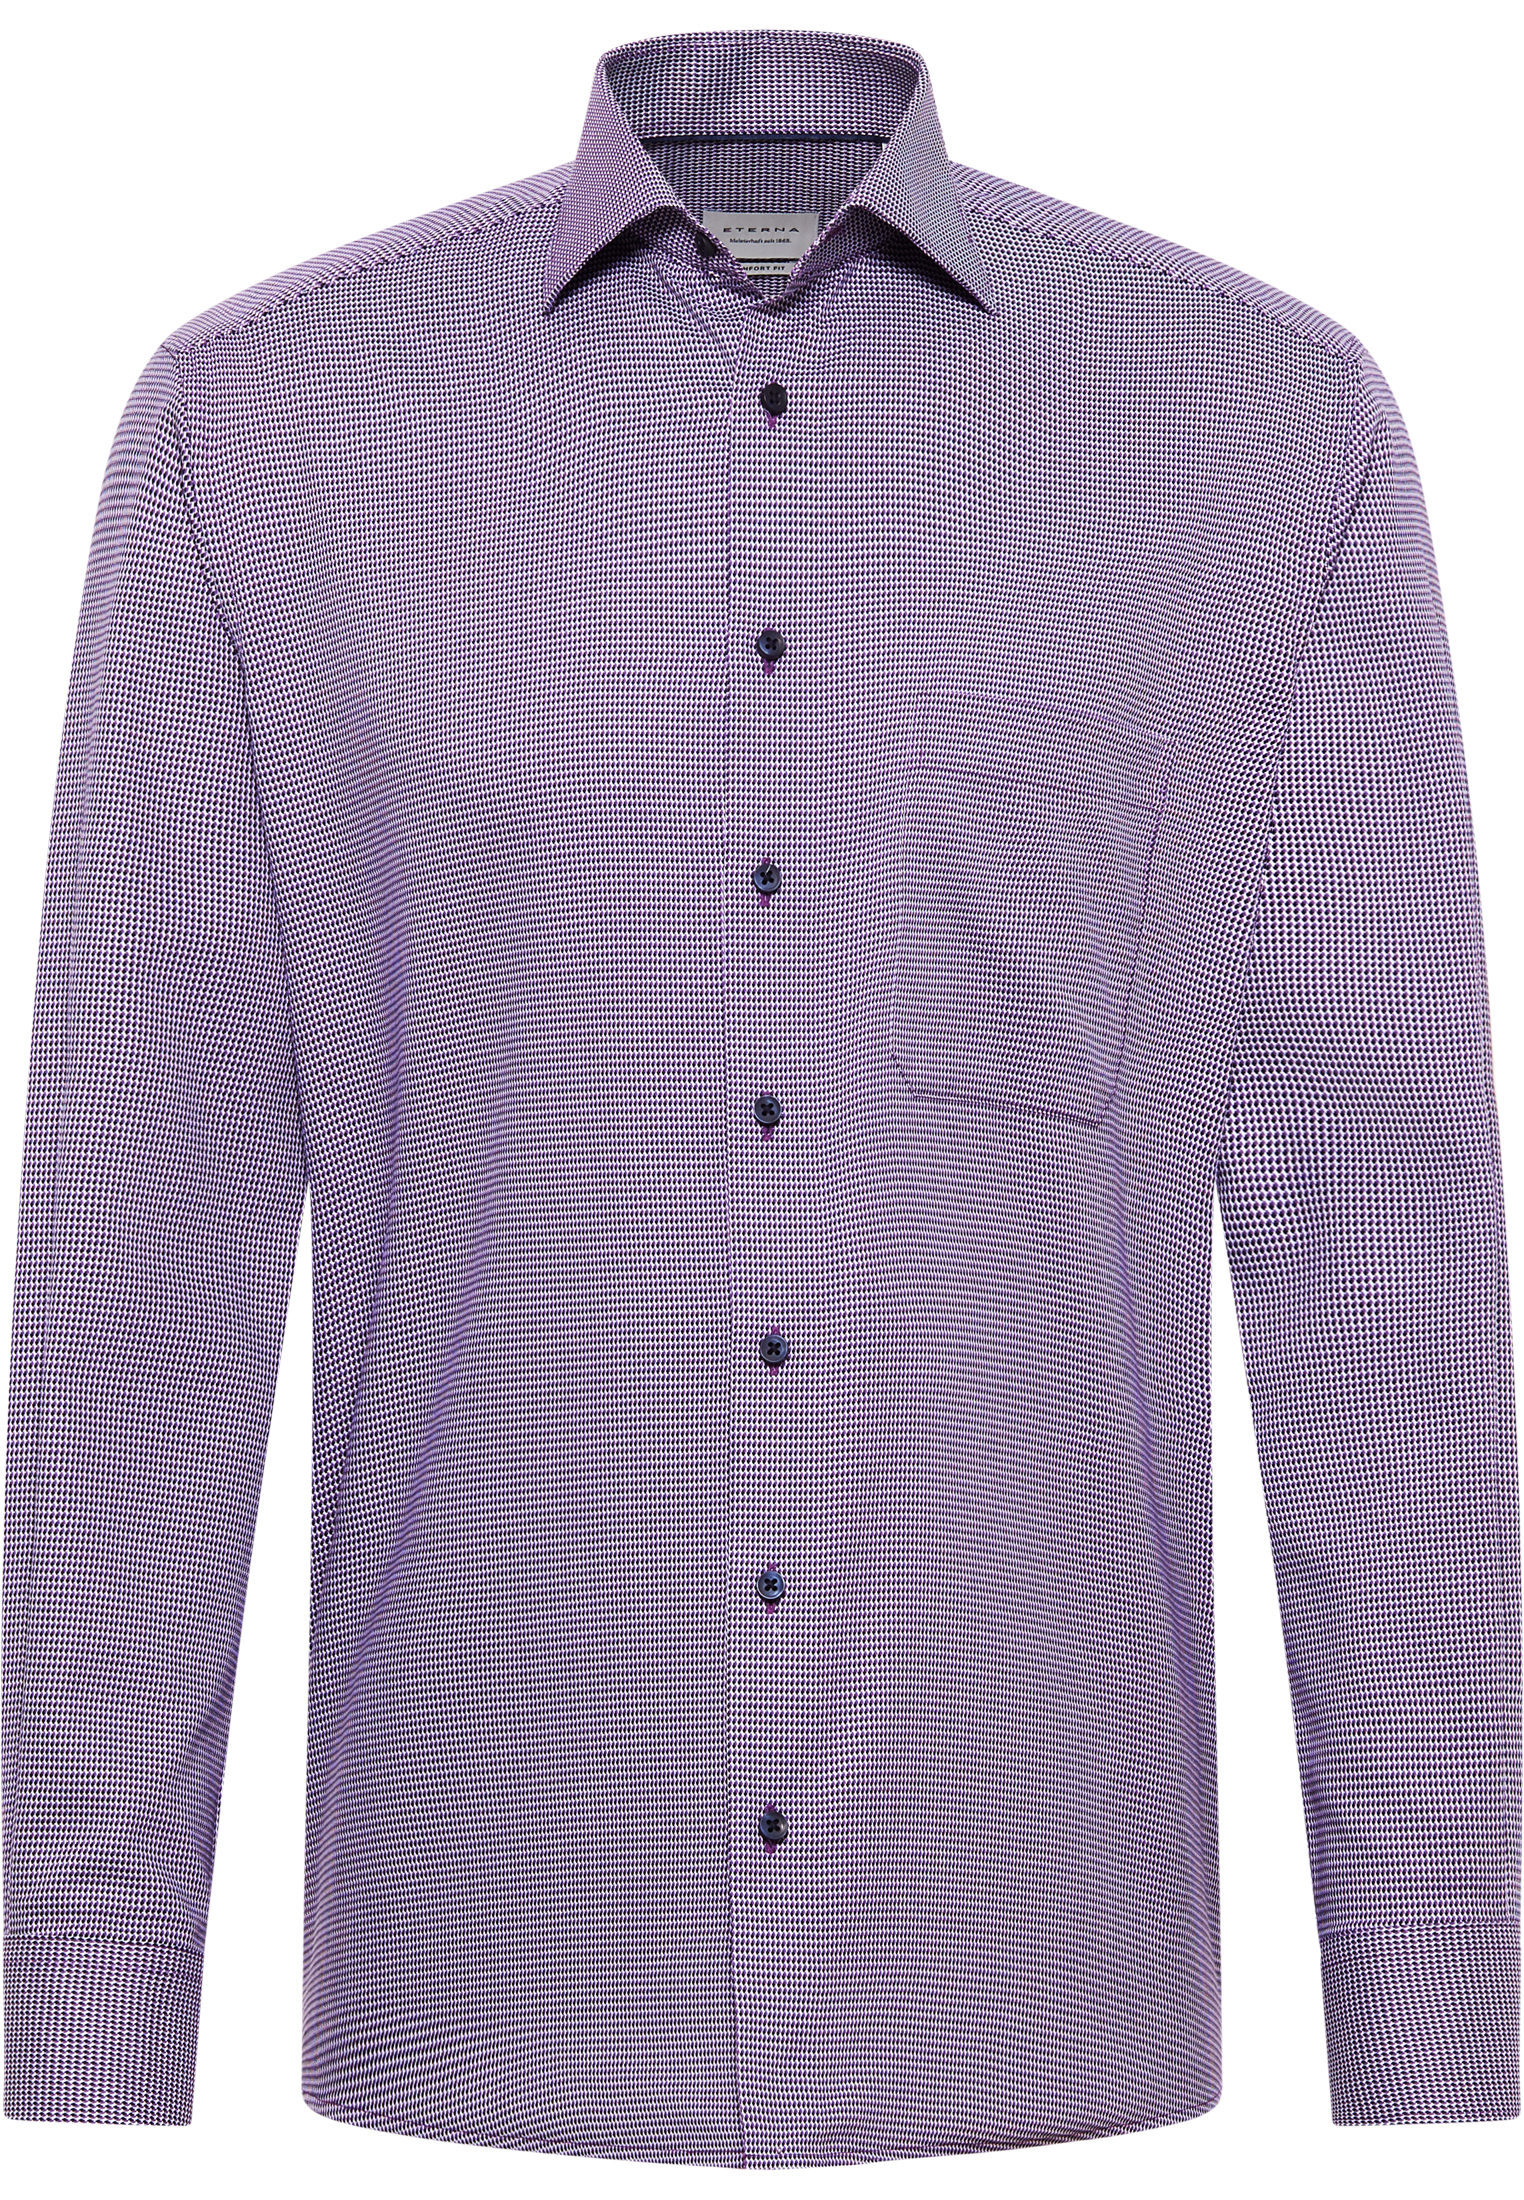 COMFORT FIT Hemd in violett strukturiert